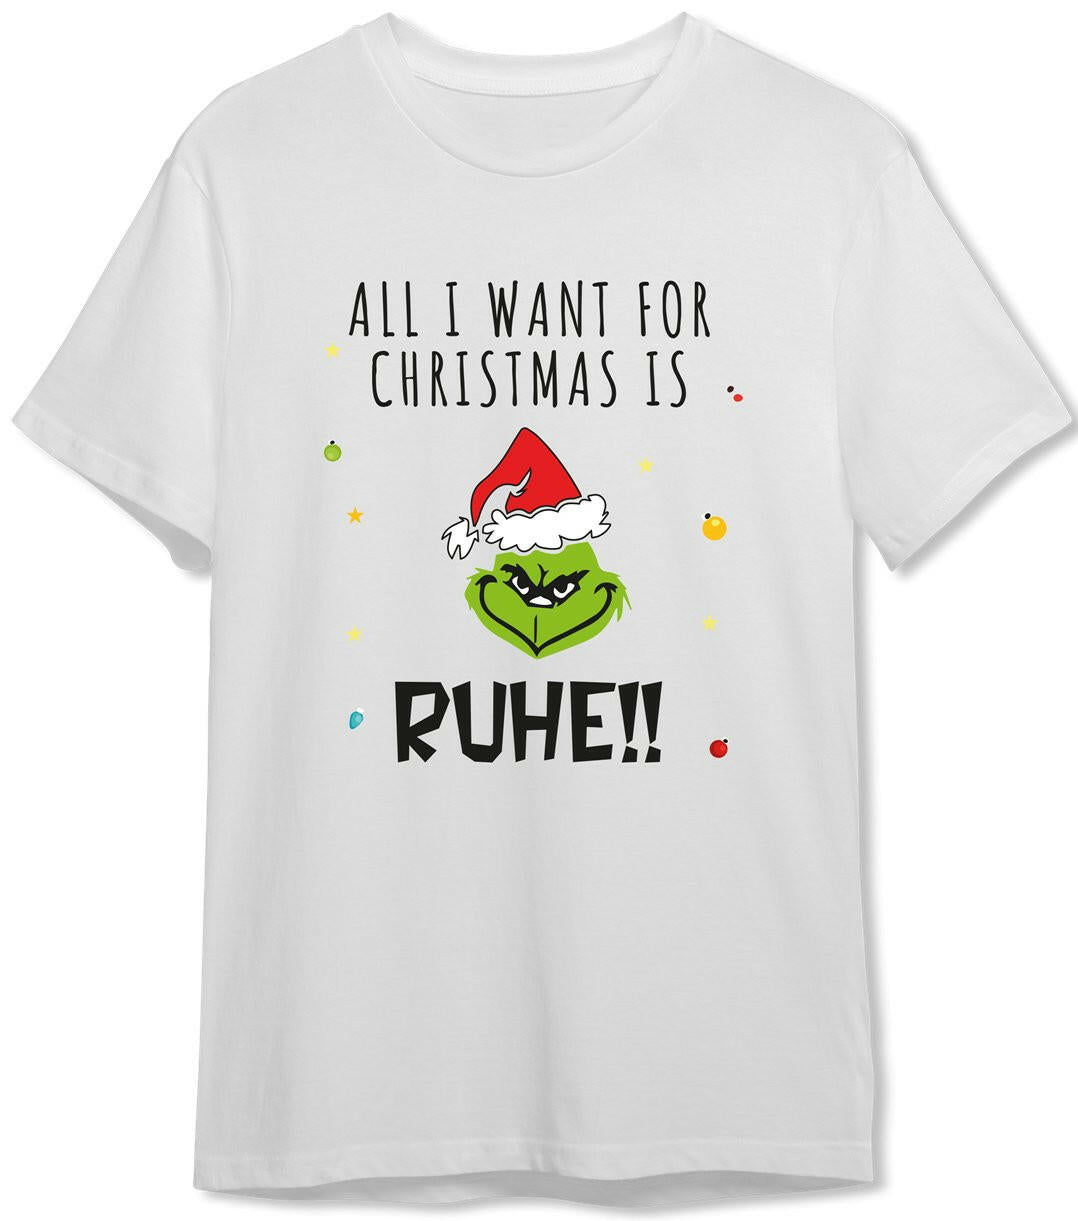 Bild: T-Shirt Herren - Grinch - All I want for Christmas is Ruhe! (Gesicht) Geschenkidee